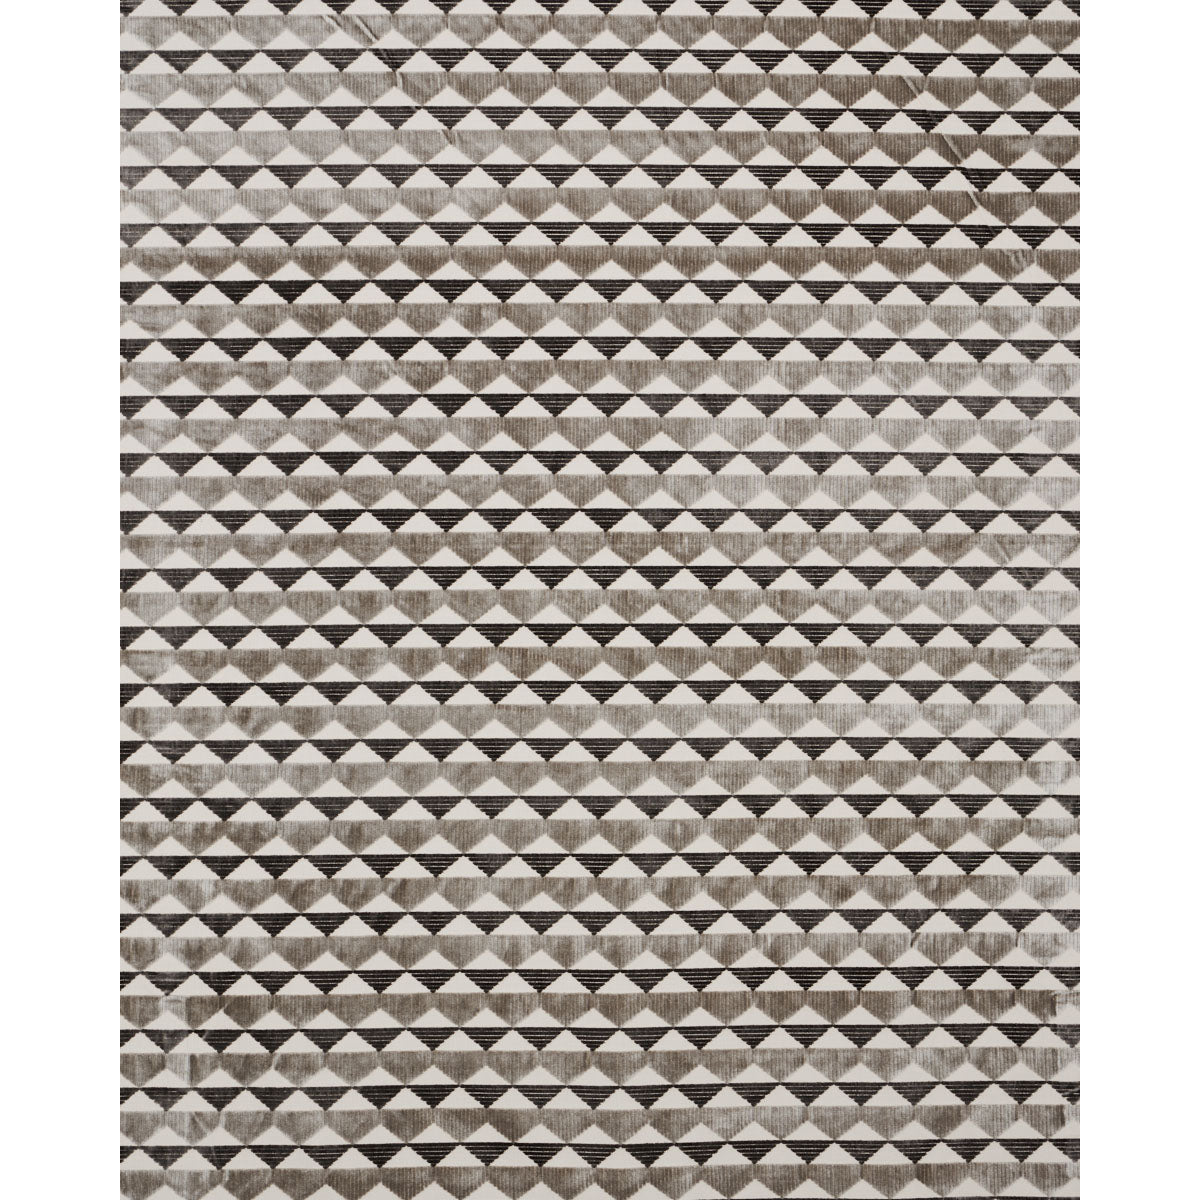 Purchase 81822 Ridge Line Velvet, Stone Grey by Schumacher Fabric 1